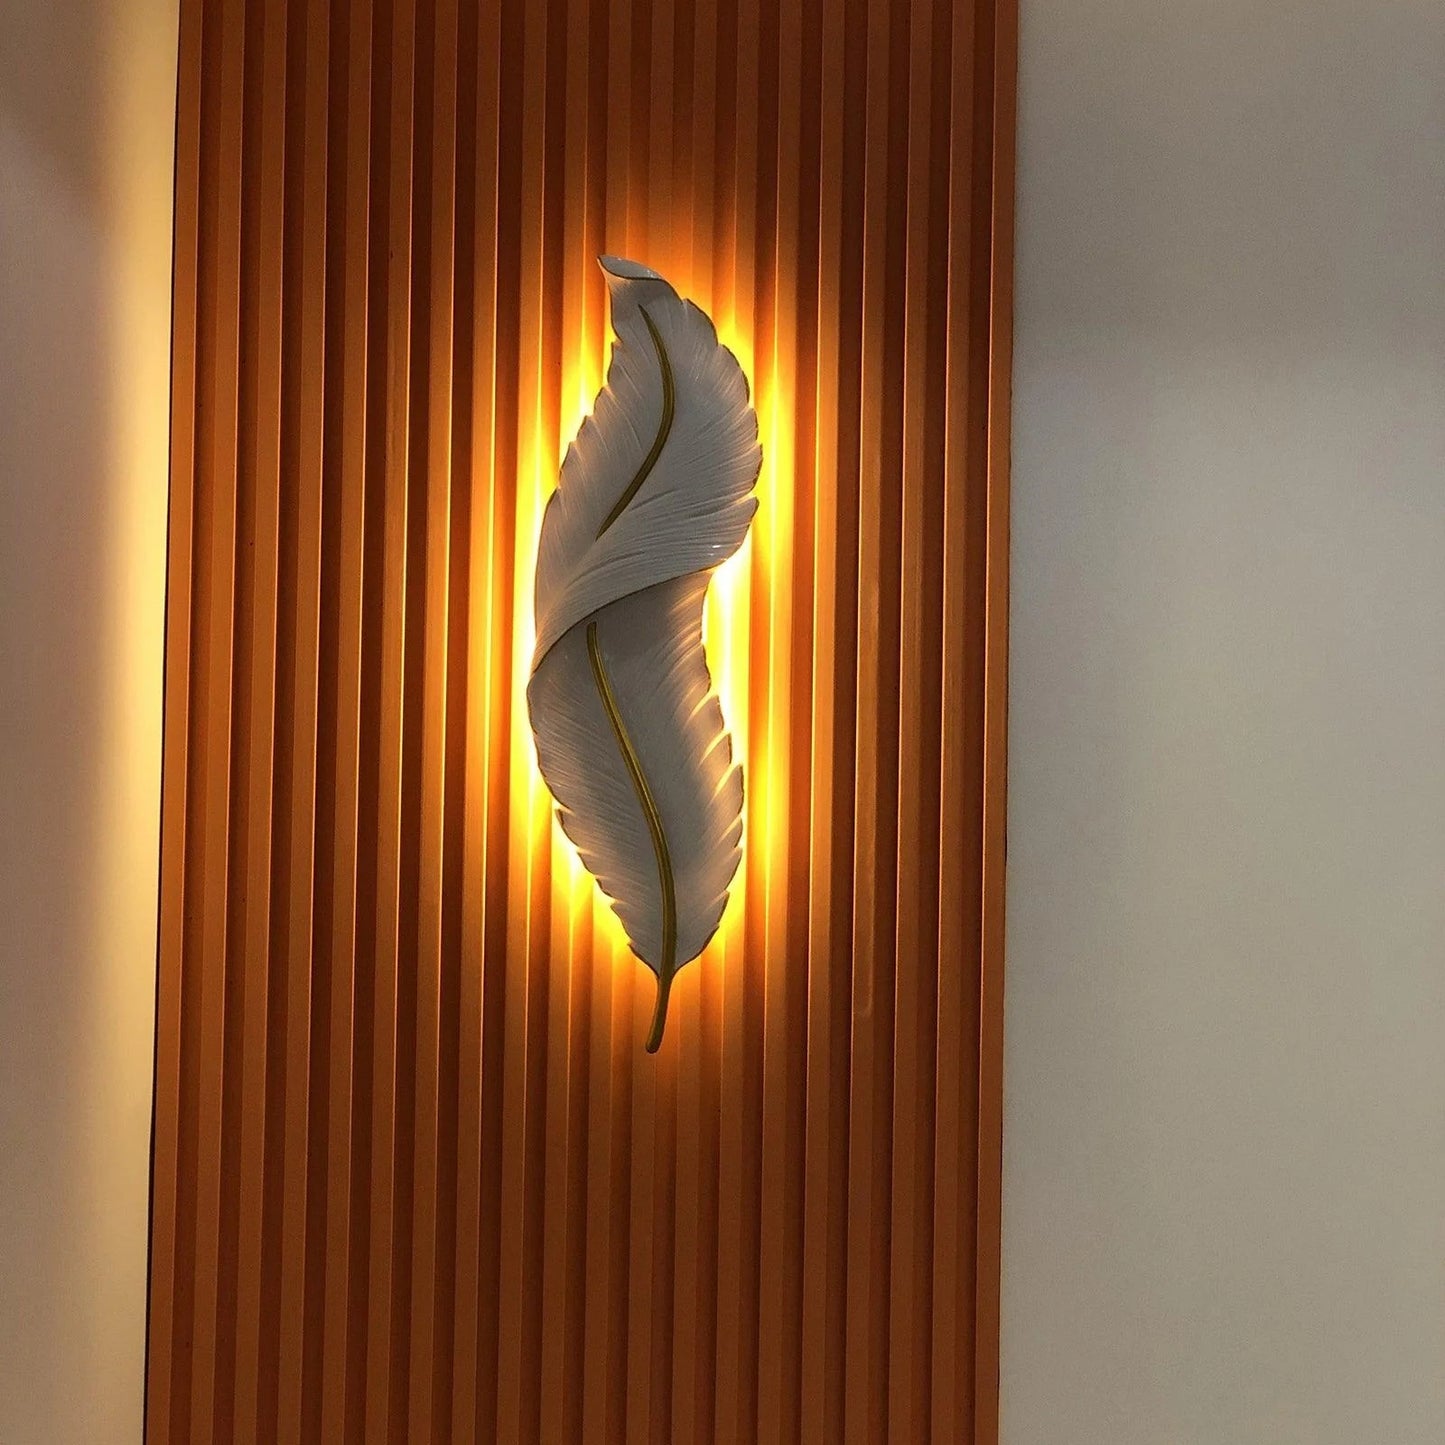 Light Luxury Feather Wall Lamp